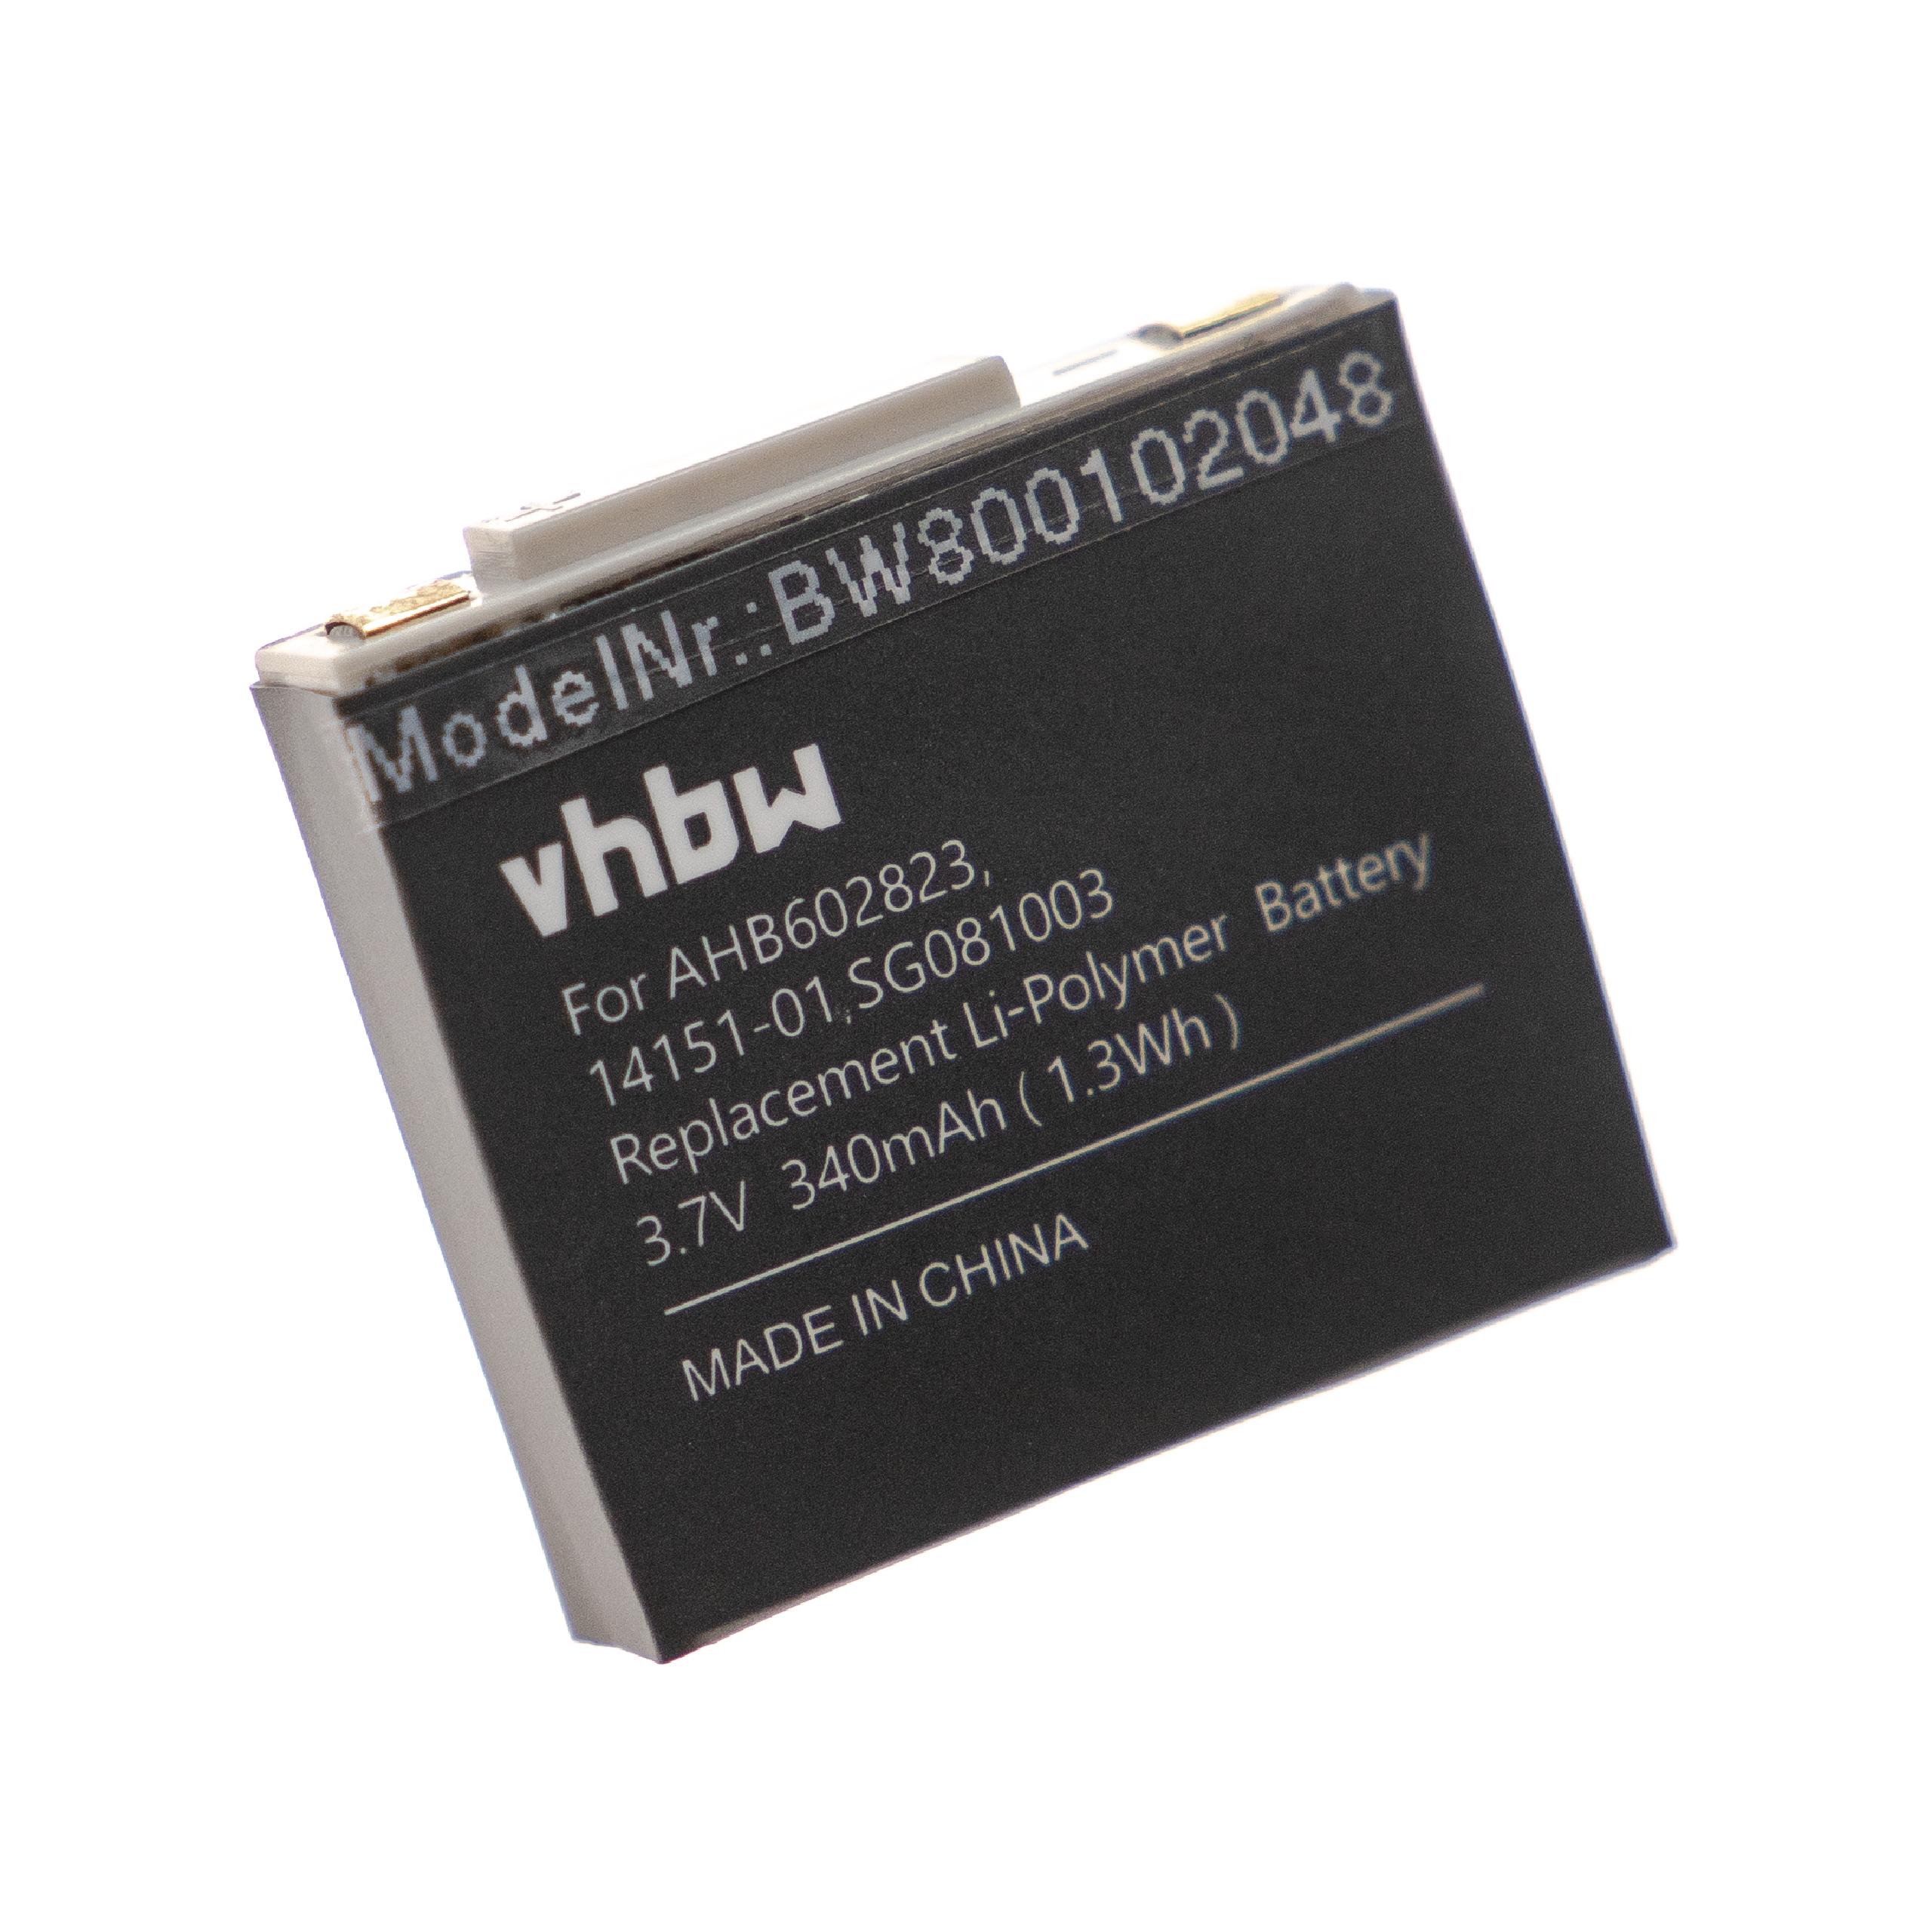 Wireless Headset Battery Replacement for GN Netcom 2901-249, 14151-02, 14151-01 - 340mAh 3.7V Li-polymer